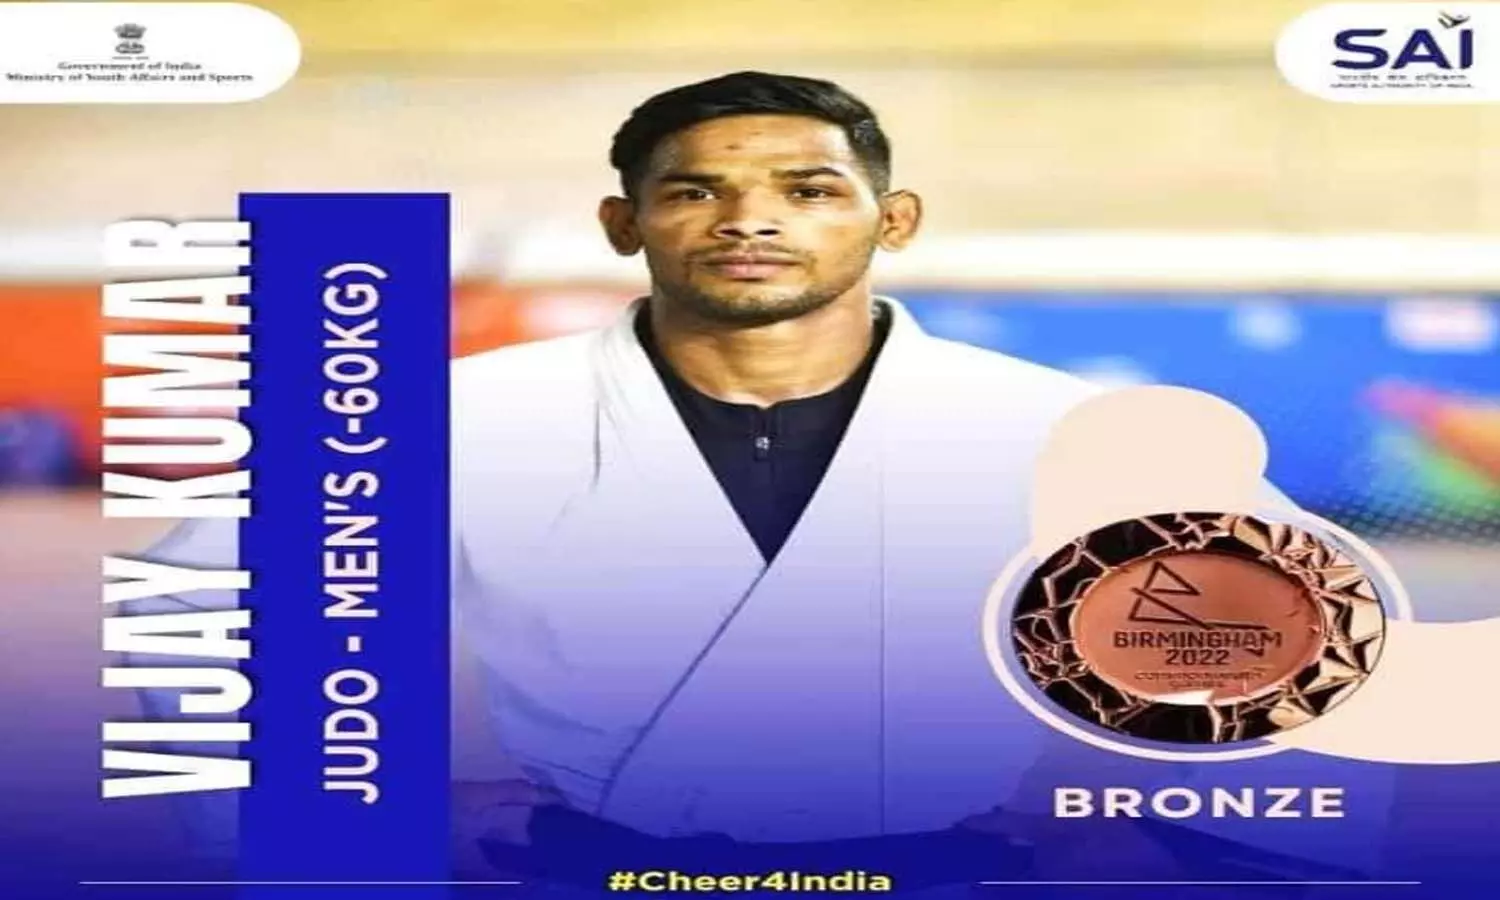 Gorakhpur University to award Guru Gorakhnath Sports Fellowship to Vijay Kumar Yadav, who won bronze in Commonwealth Games